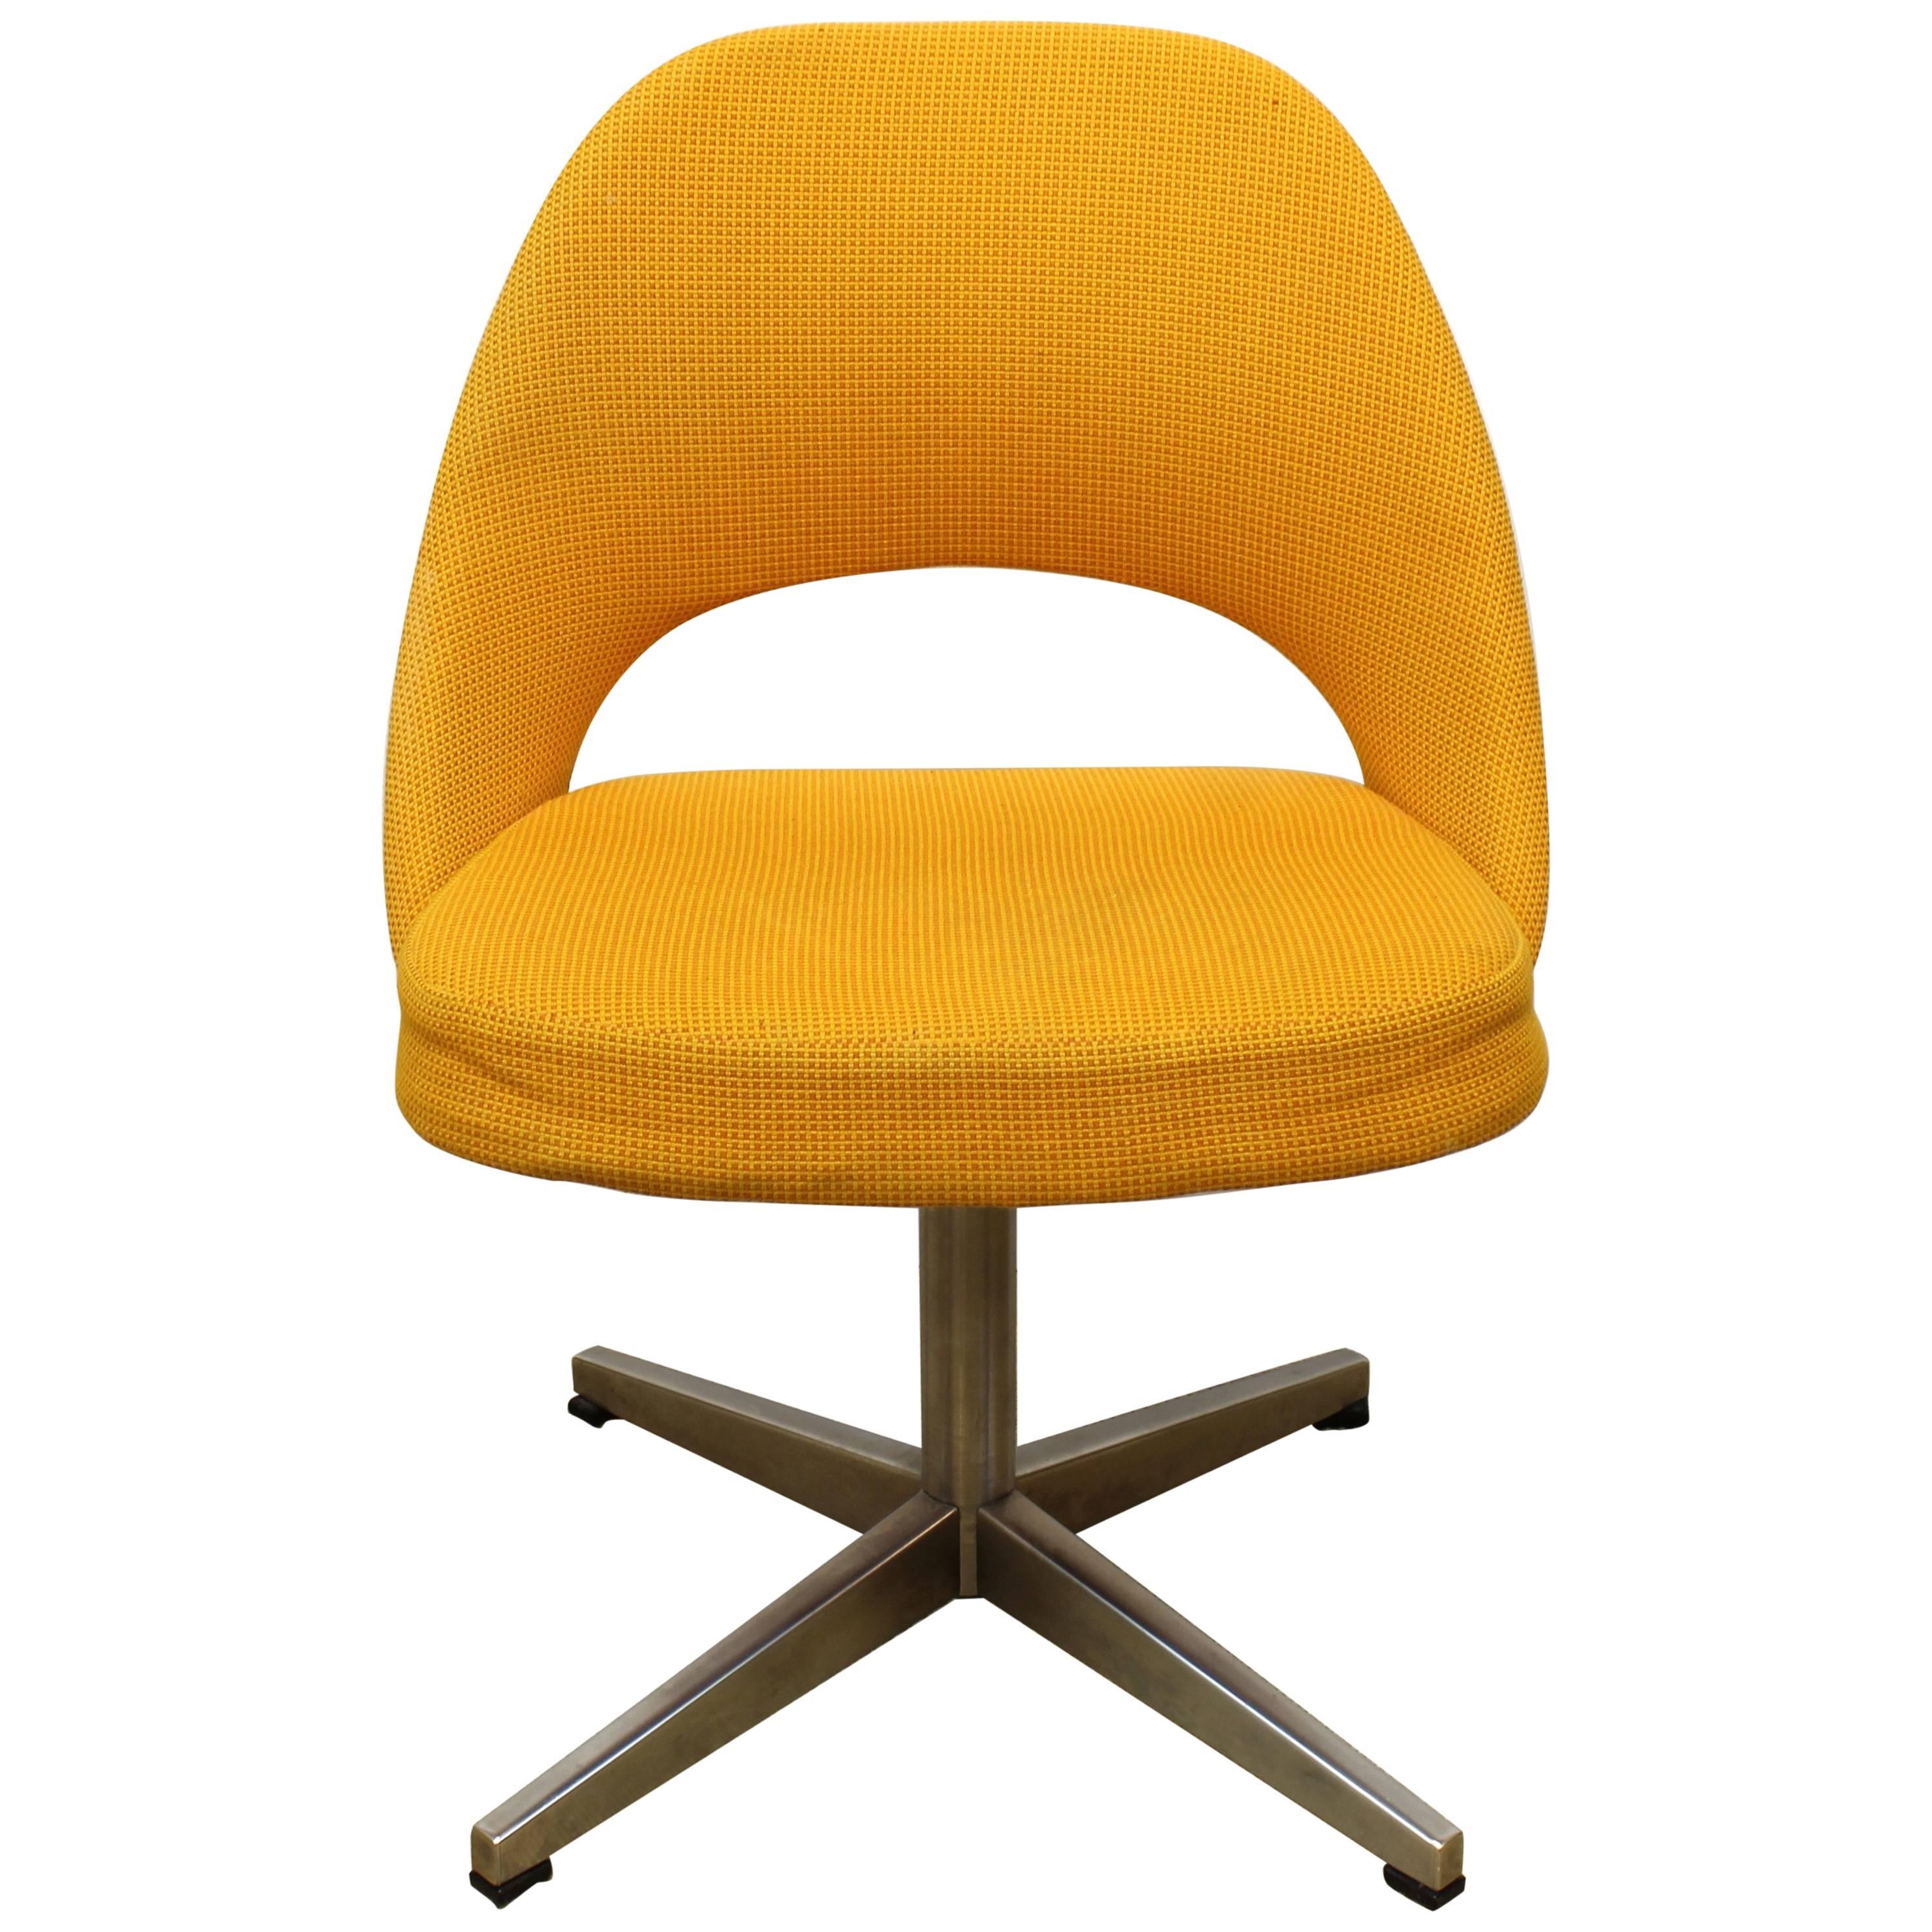 Eero Saarinen for Knoll International Swivel Chair with Golden Yellow Upholstery